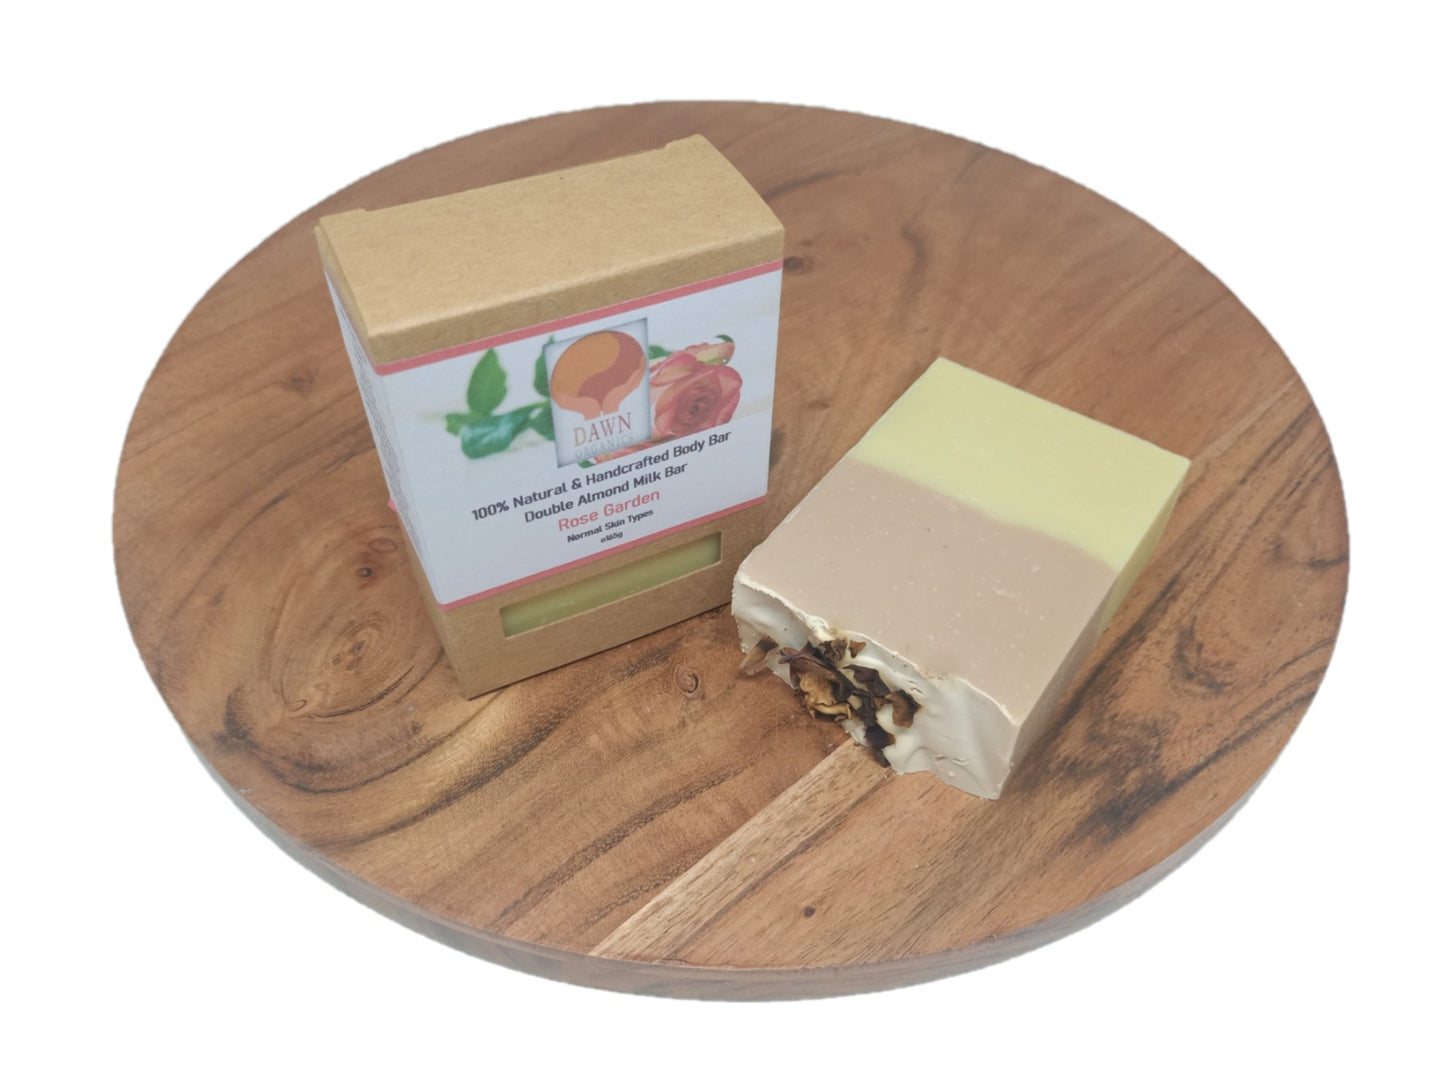 Aromatherapy Double Almond Soap Bars